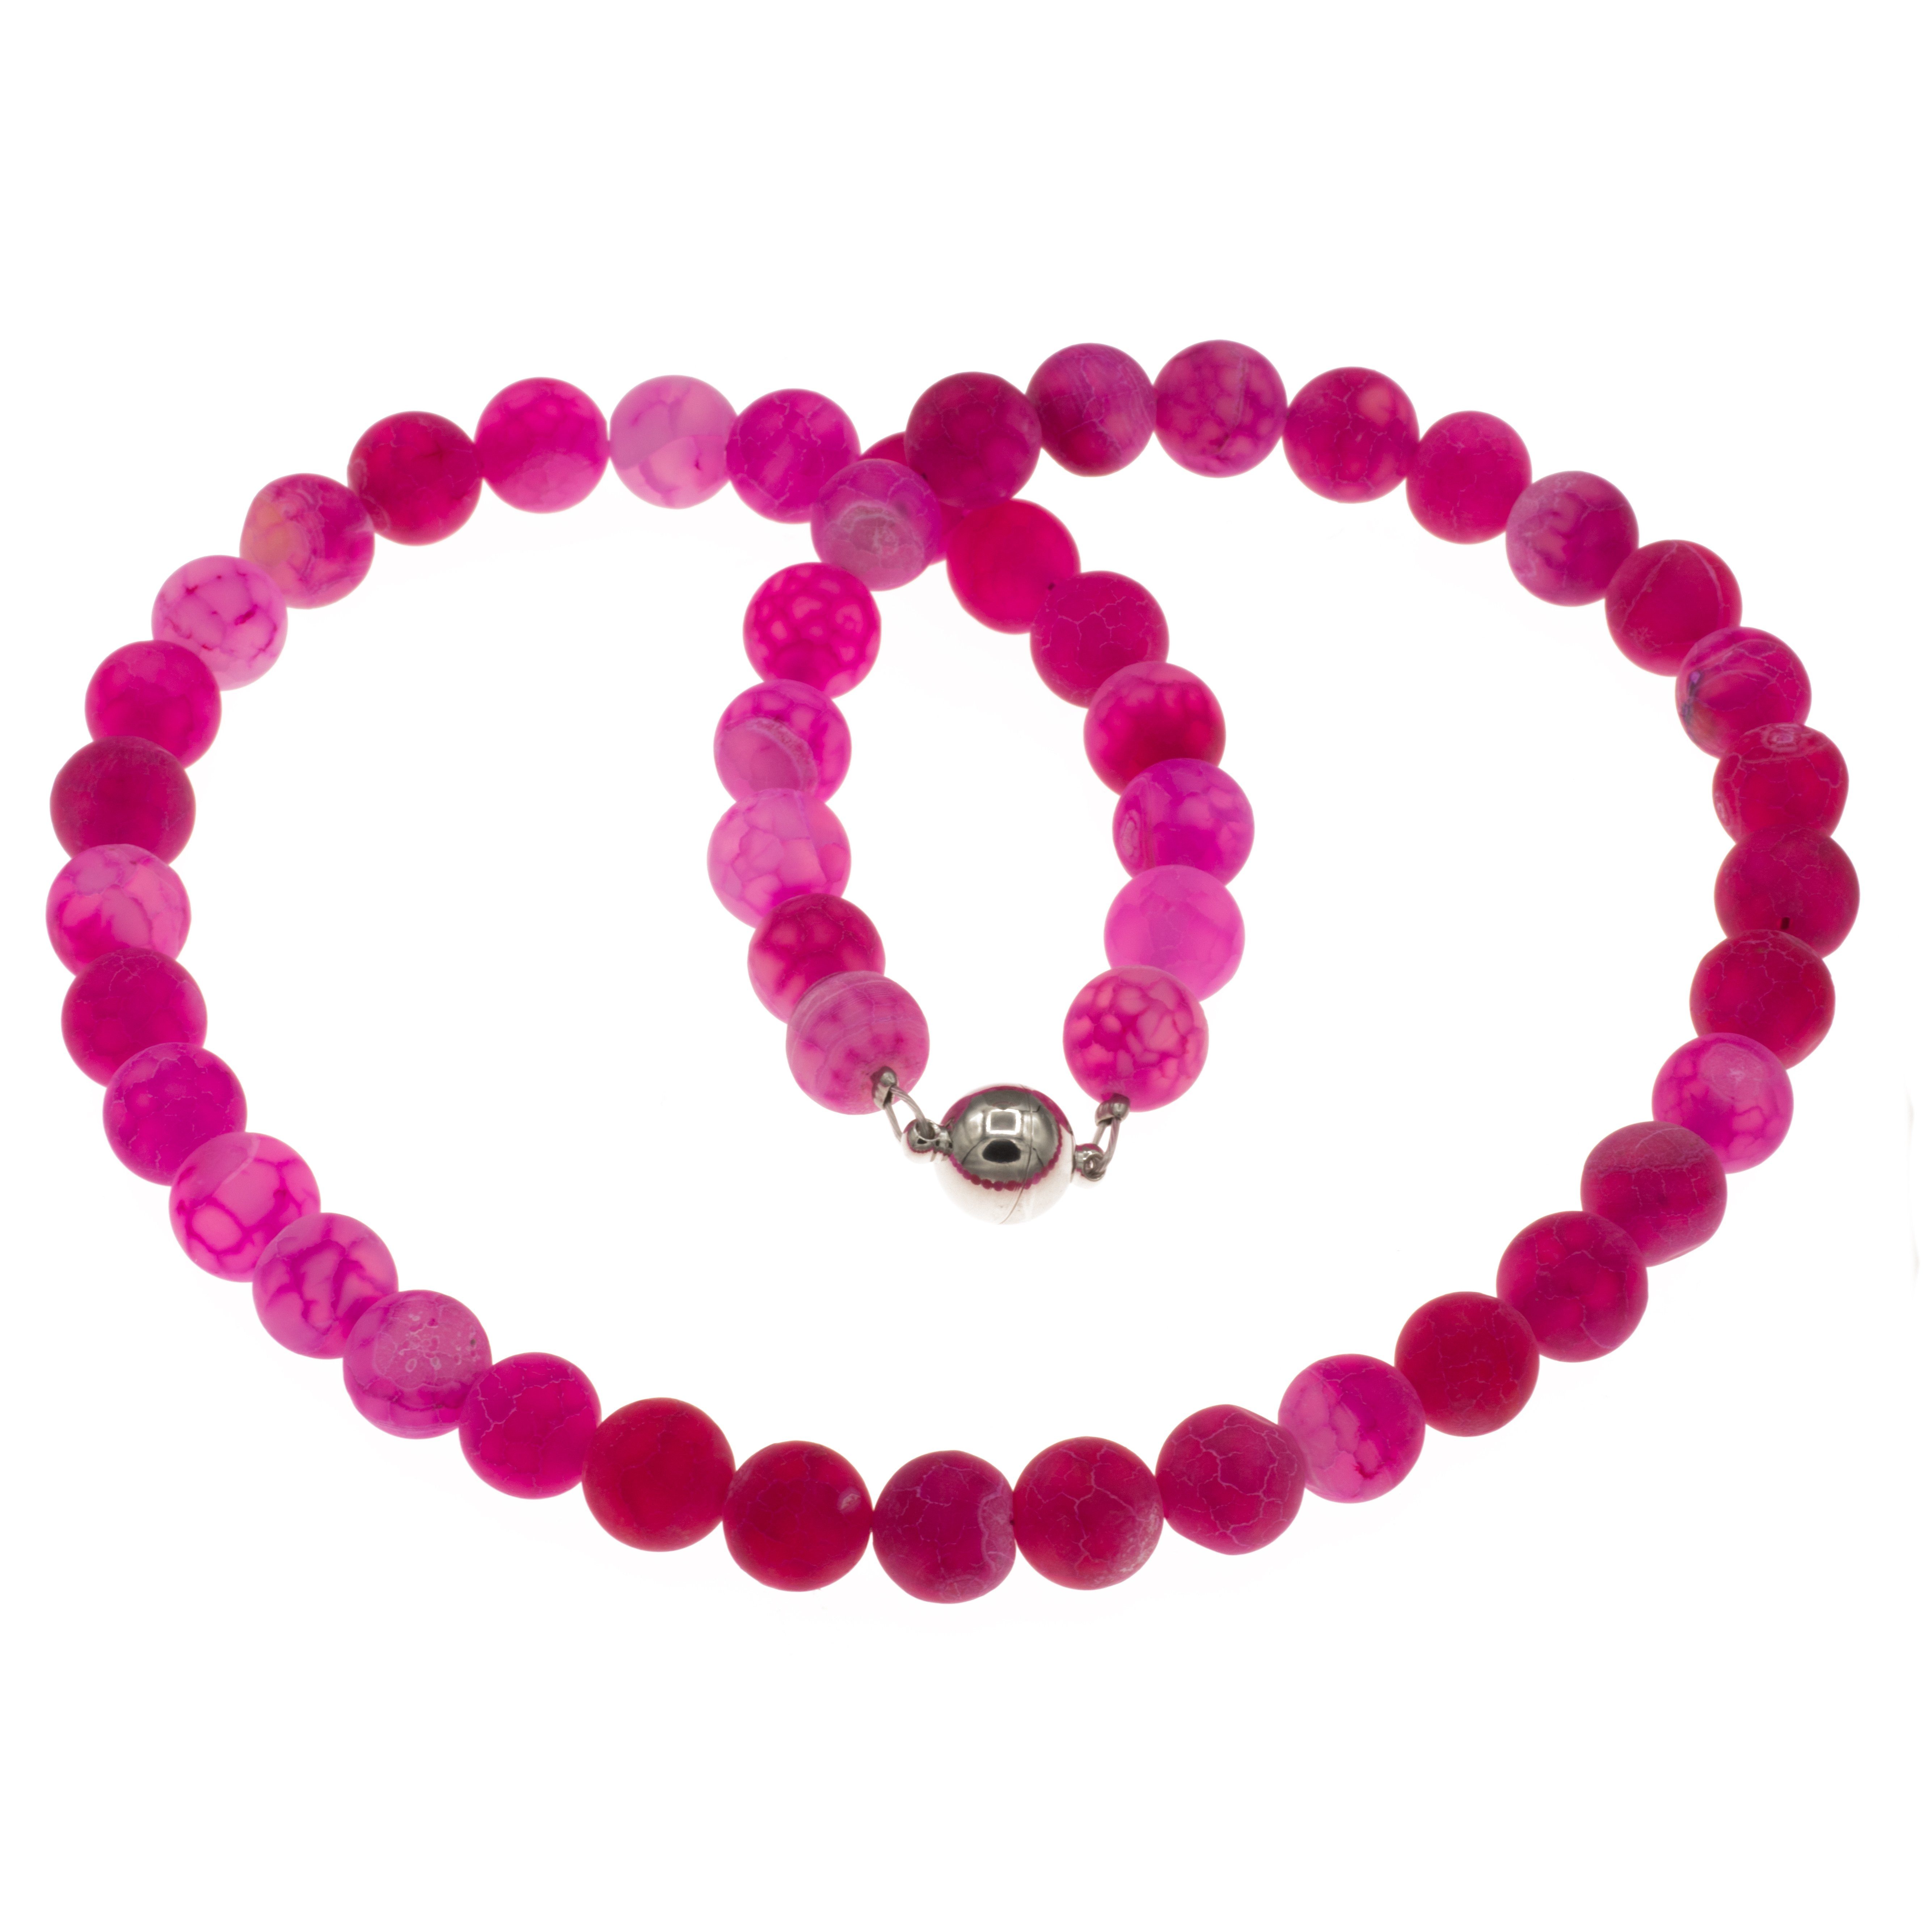 Achat Bella intensives intensives Pink mm 10 Perlen, Edelsteinen Perlenkette mit kette pink Carina